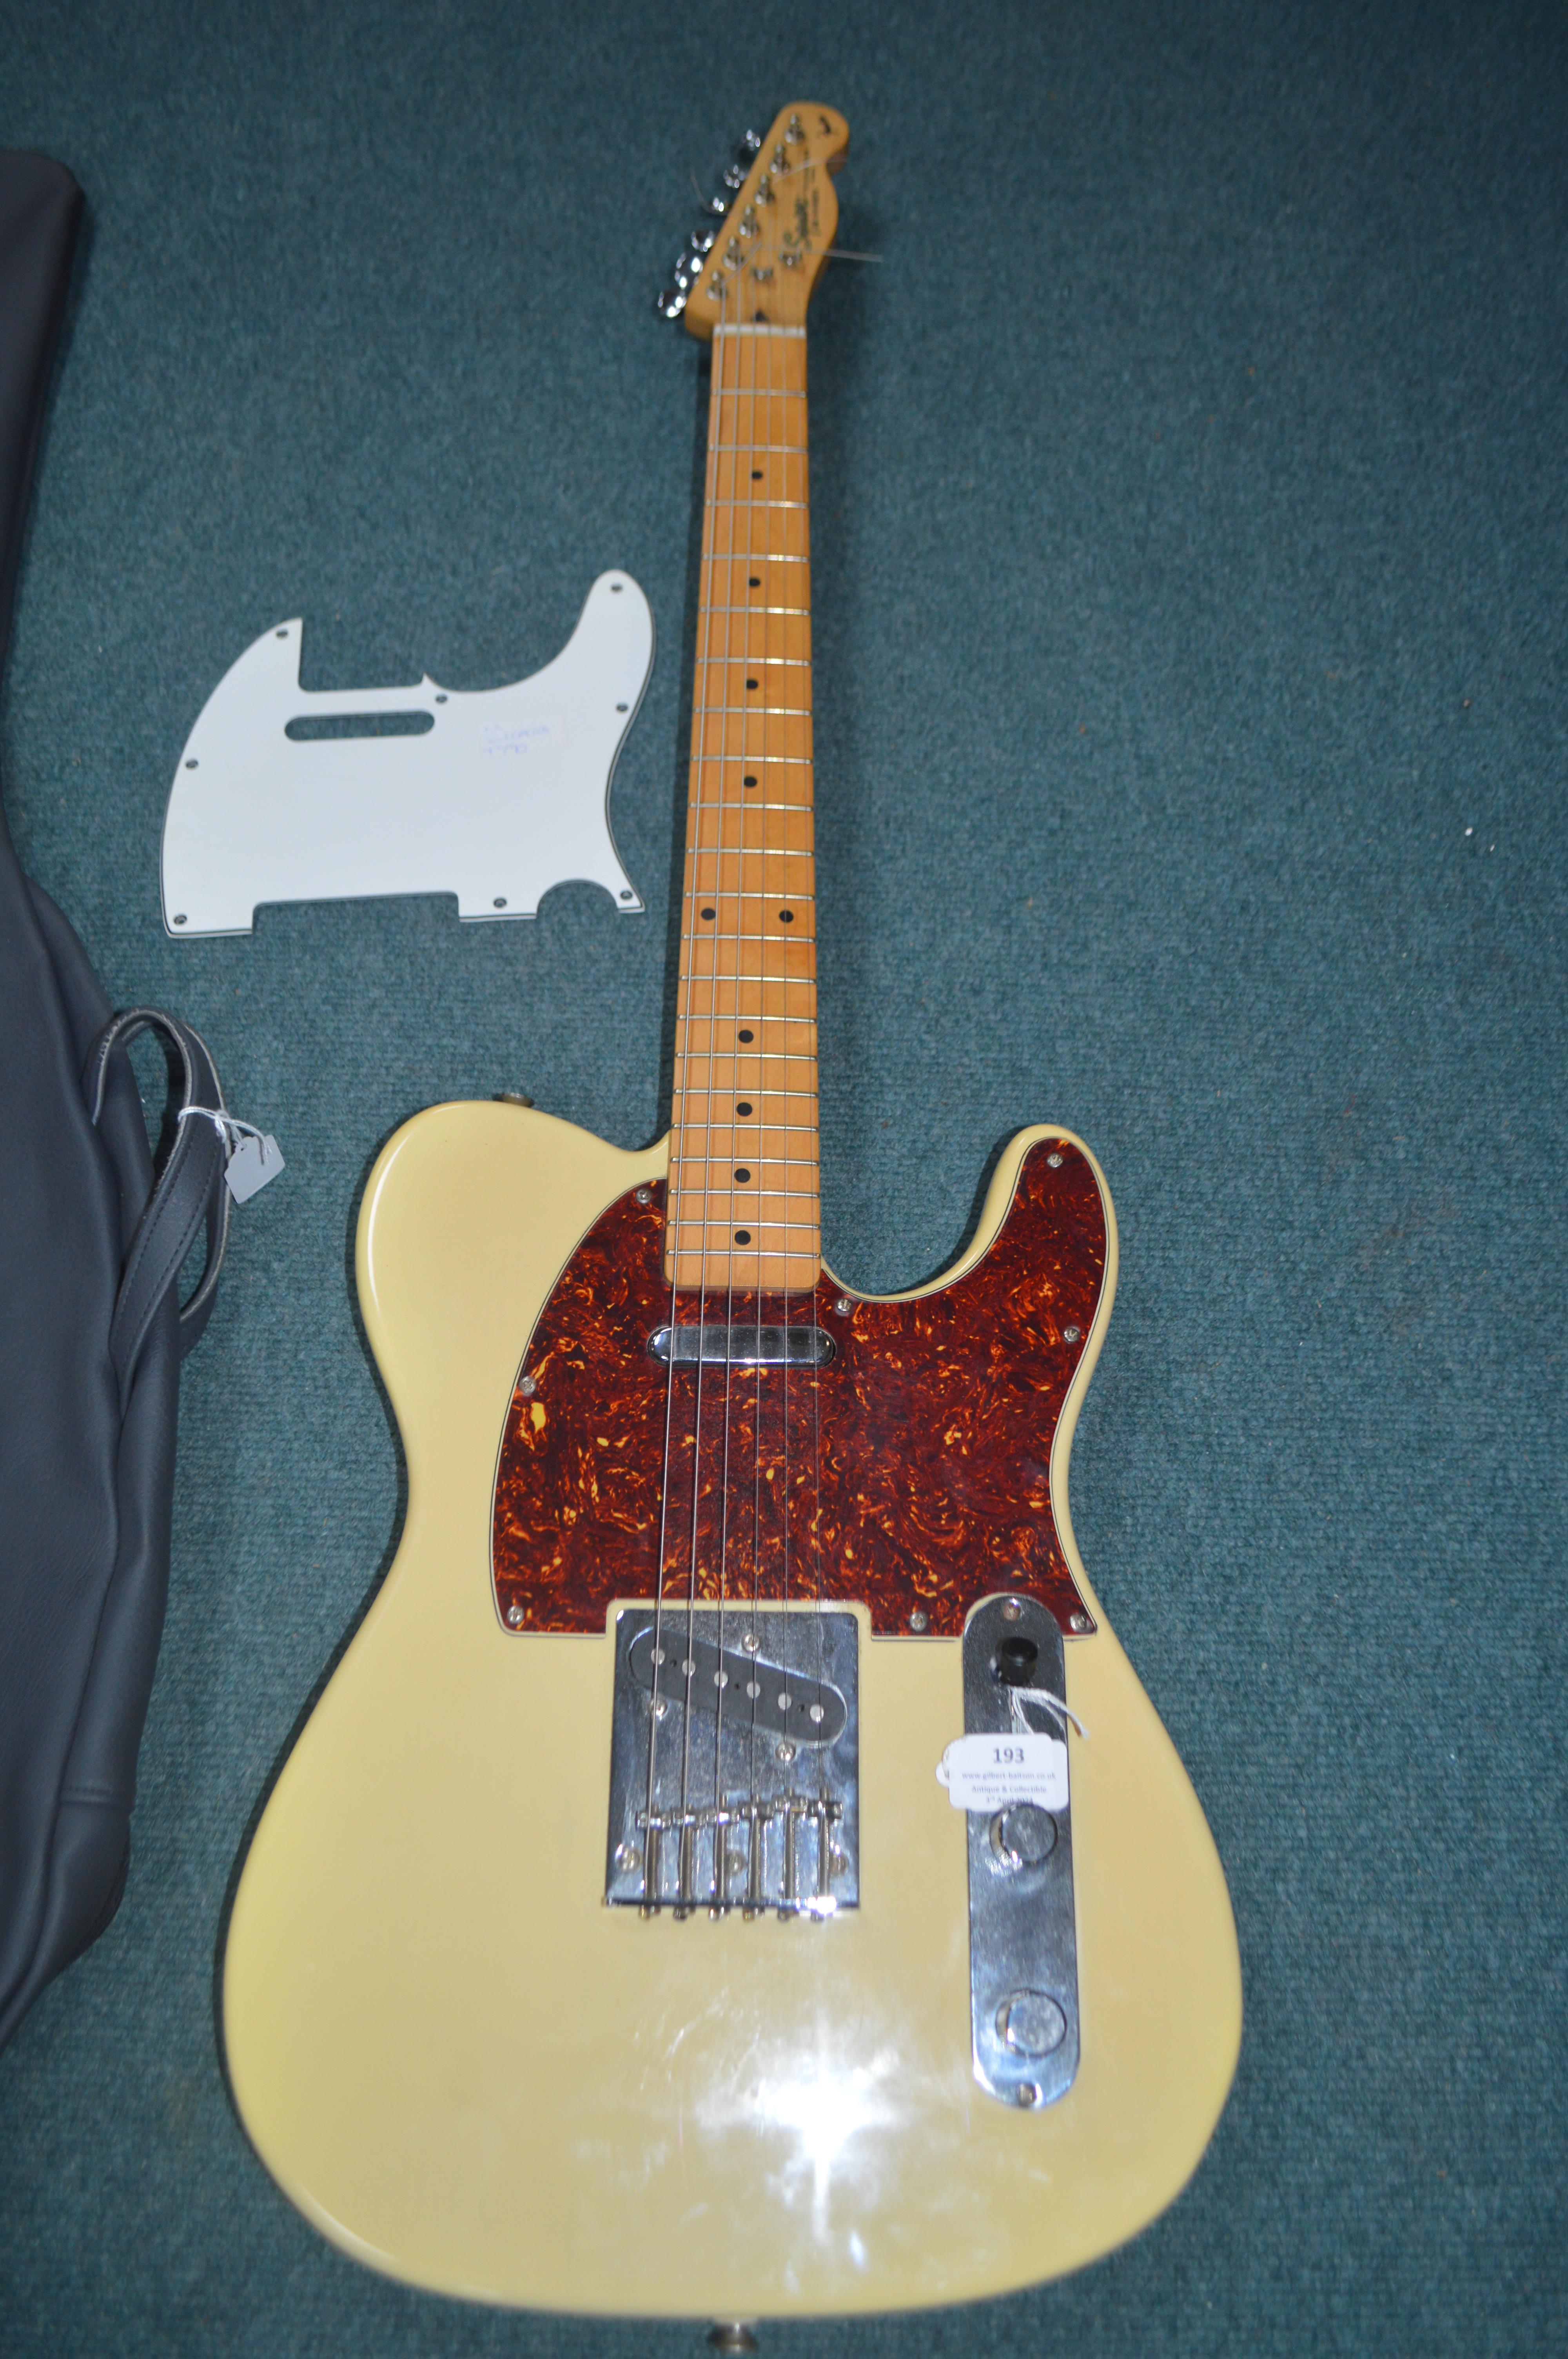 Fender Squier Telecaster Guitar Made in Korea - Image 2 of 4